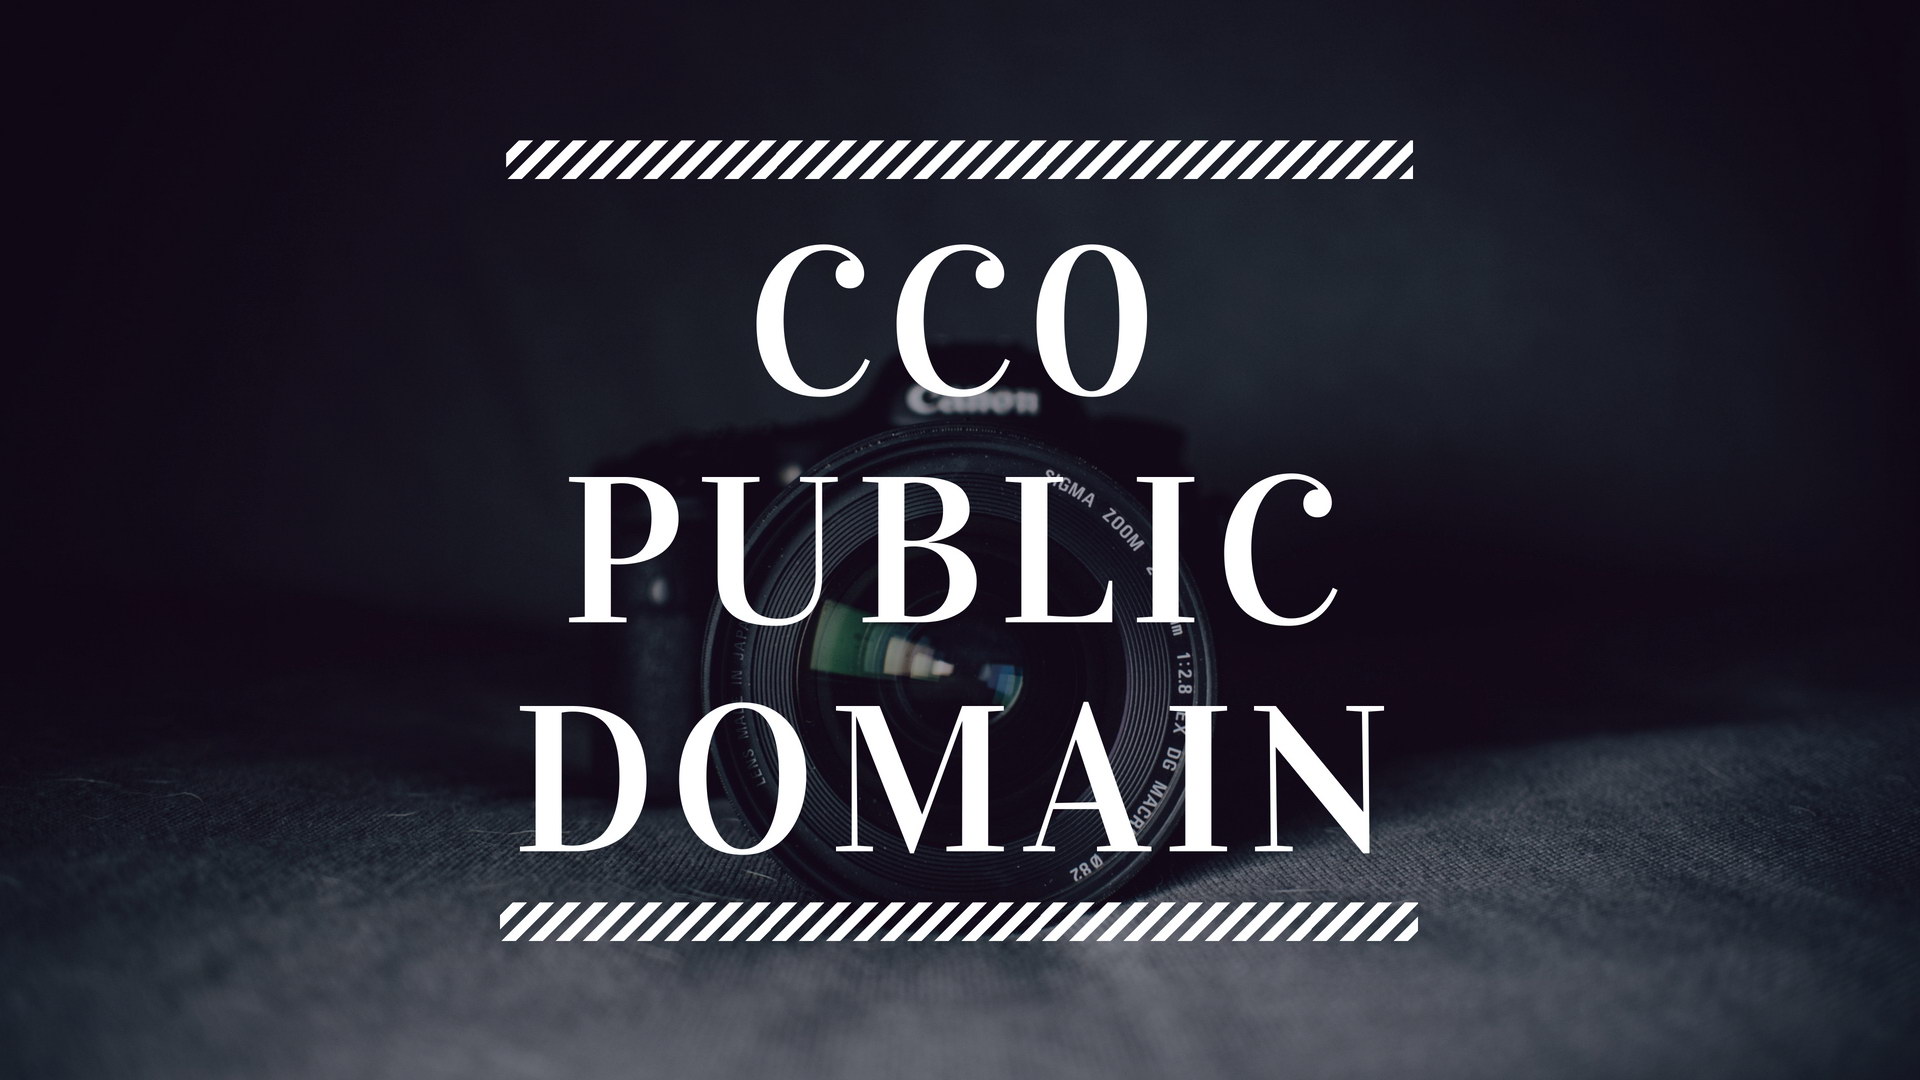 cc0-public-domain-randnotizen